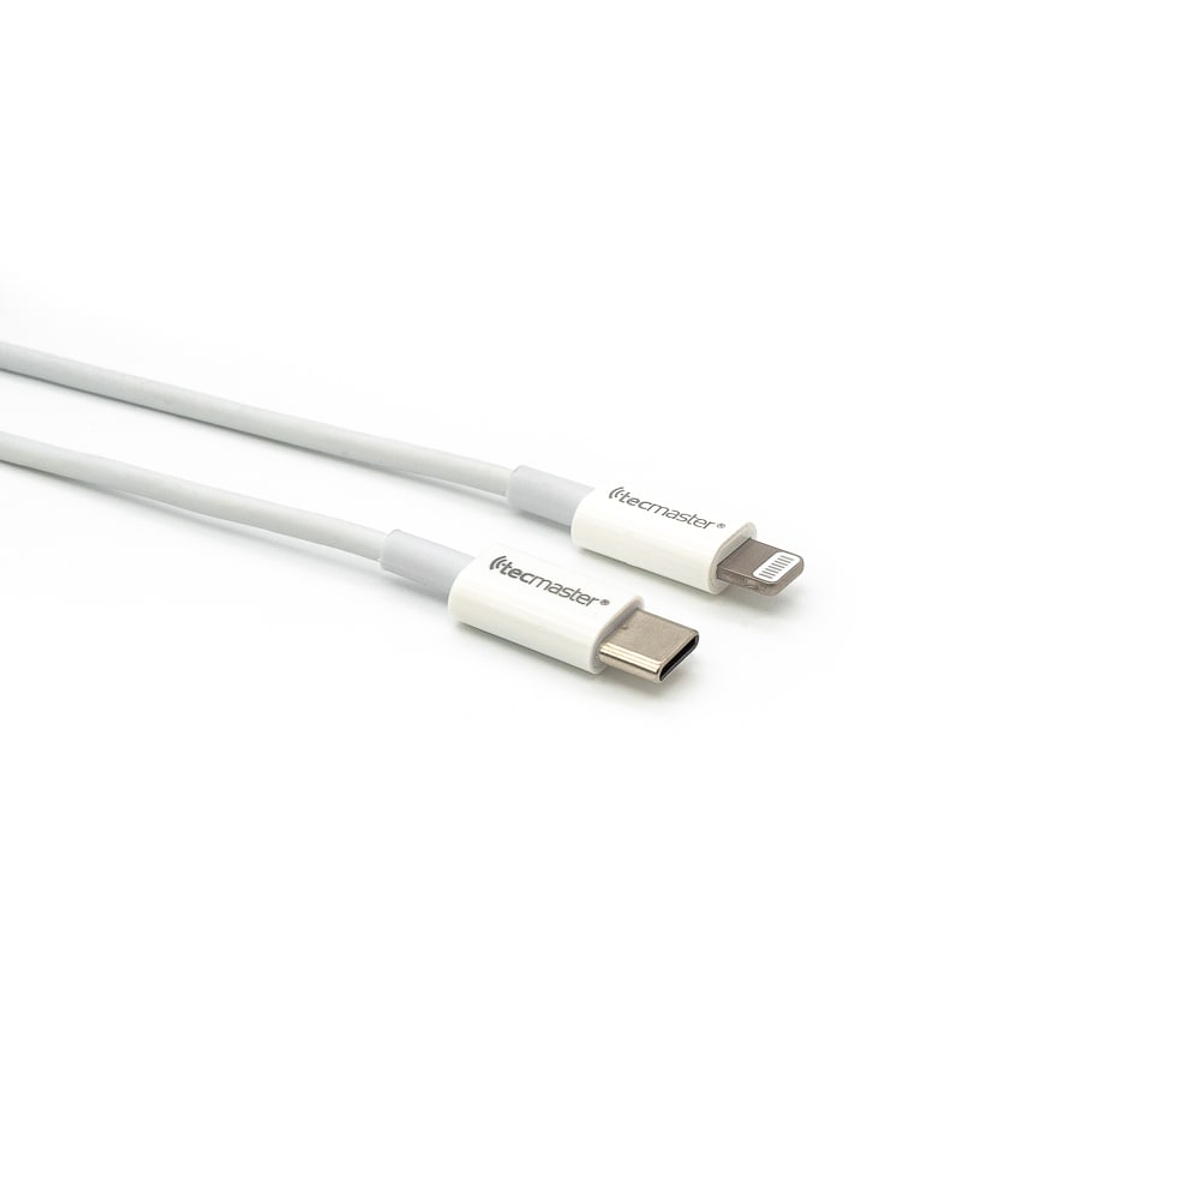 Cable iPhone USB C a Lightning Blindado Certificado MFi 1